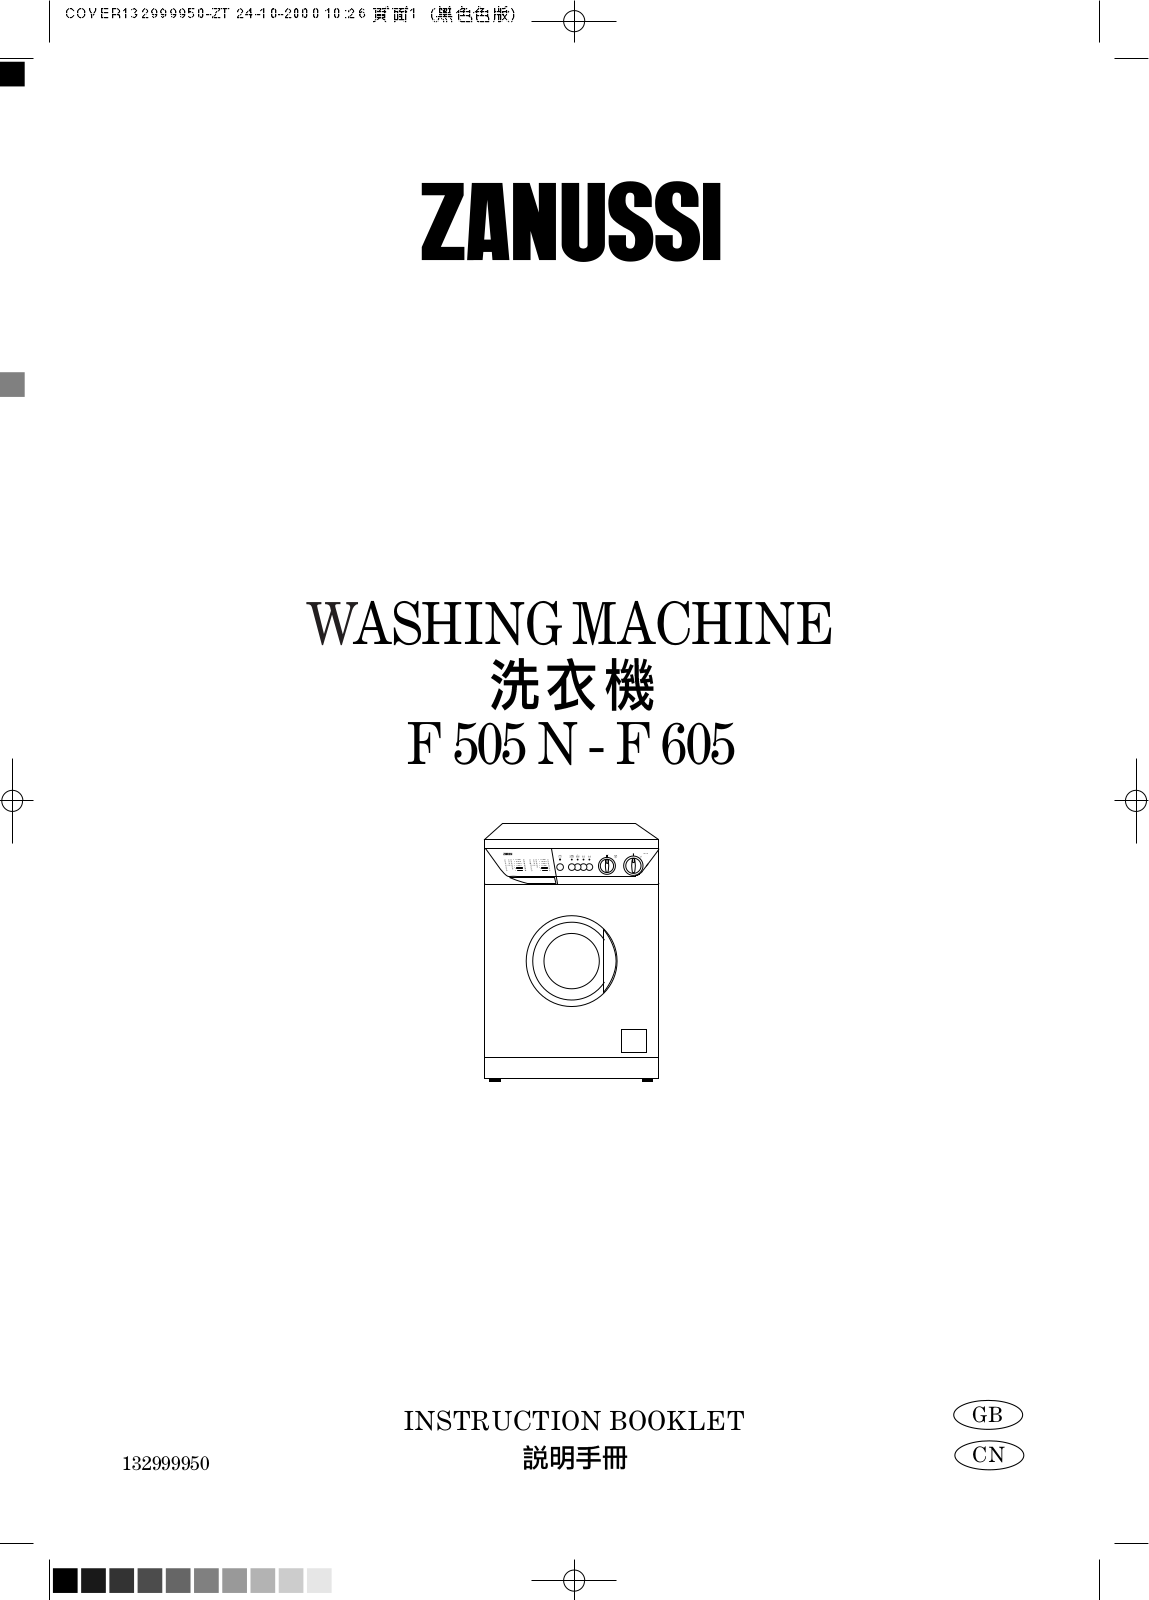 Zanussi F605, F505N User Manual